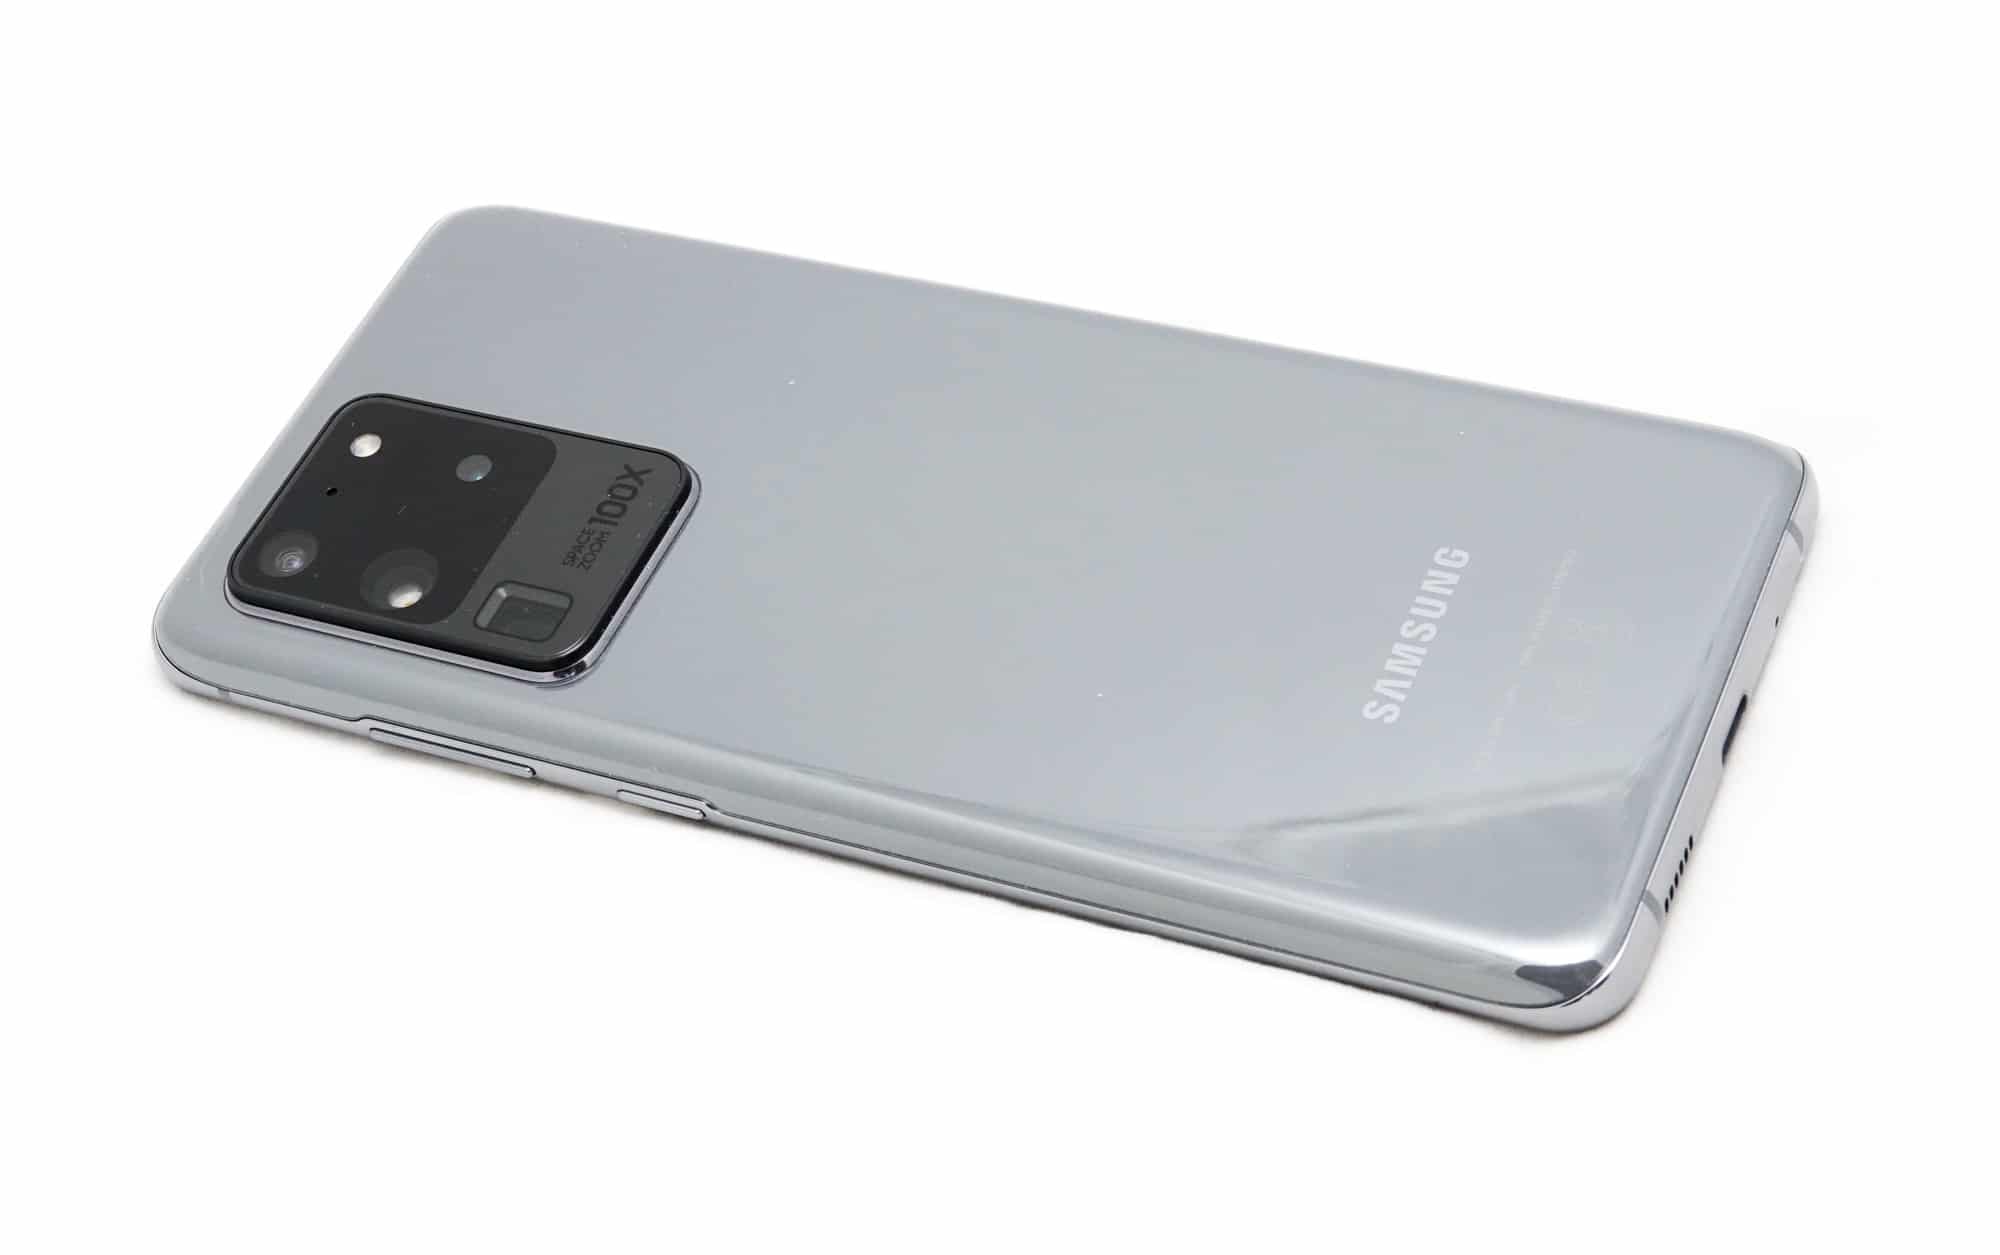 Samsung Galaxy S20 Ultra reviewed